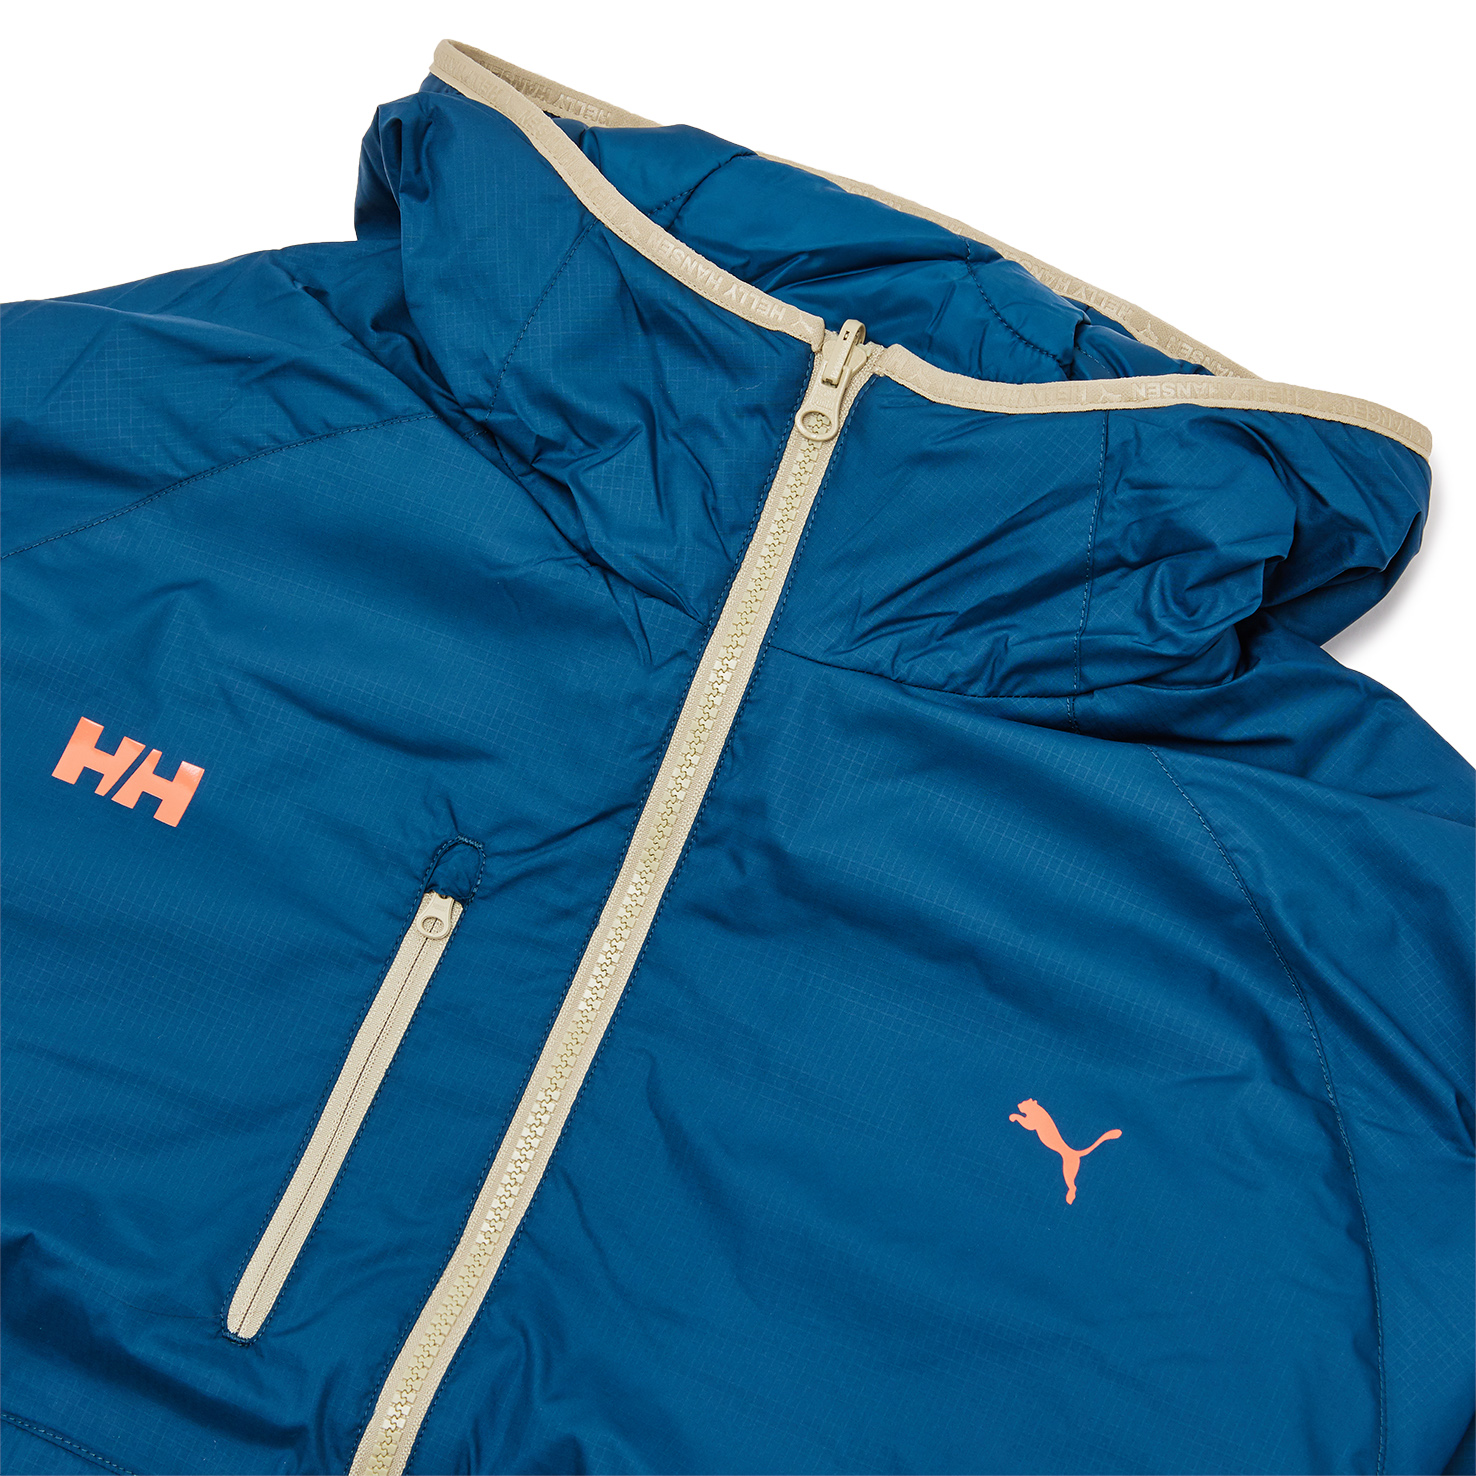 PUMA x HELLY HANSEN Rev. Padded Jacket S PUMA, размер 46-48, цвет синий PM532841 - фото 3